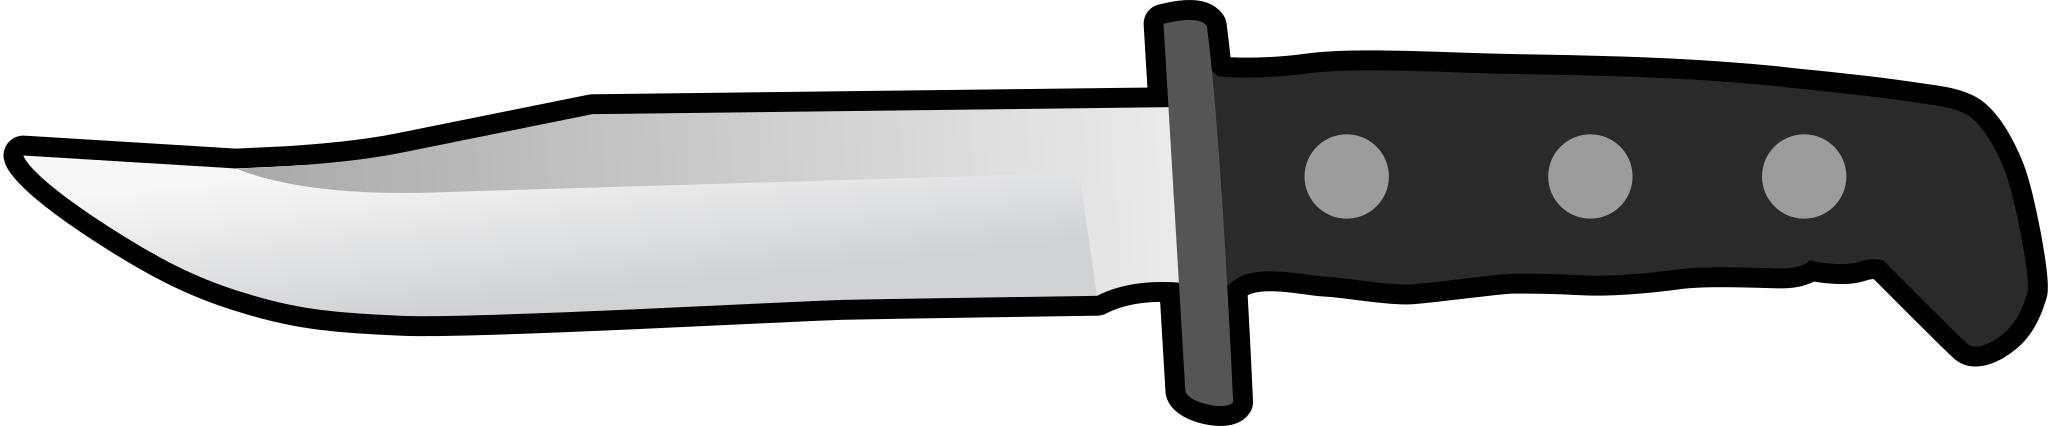 Нож для детей на прозрачном фоне